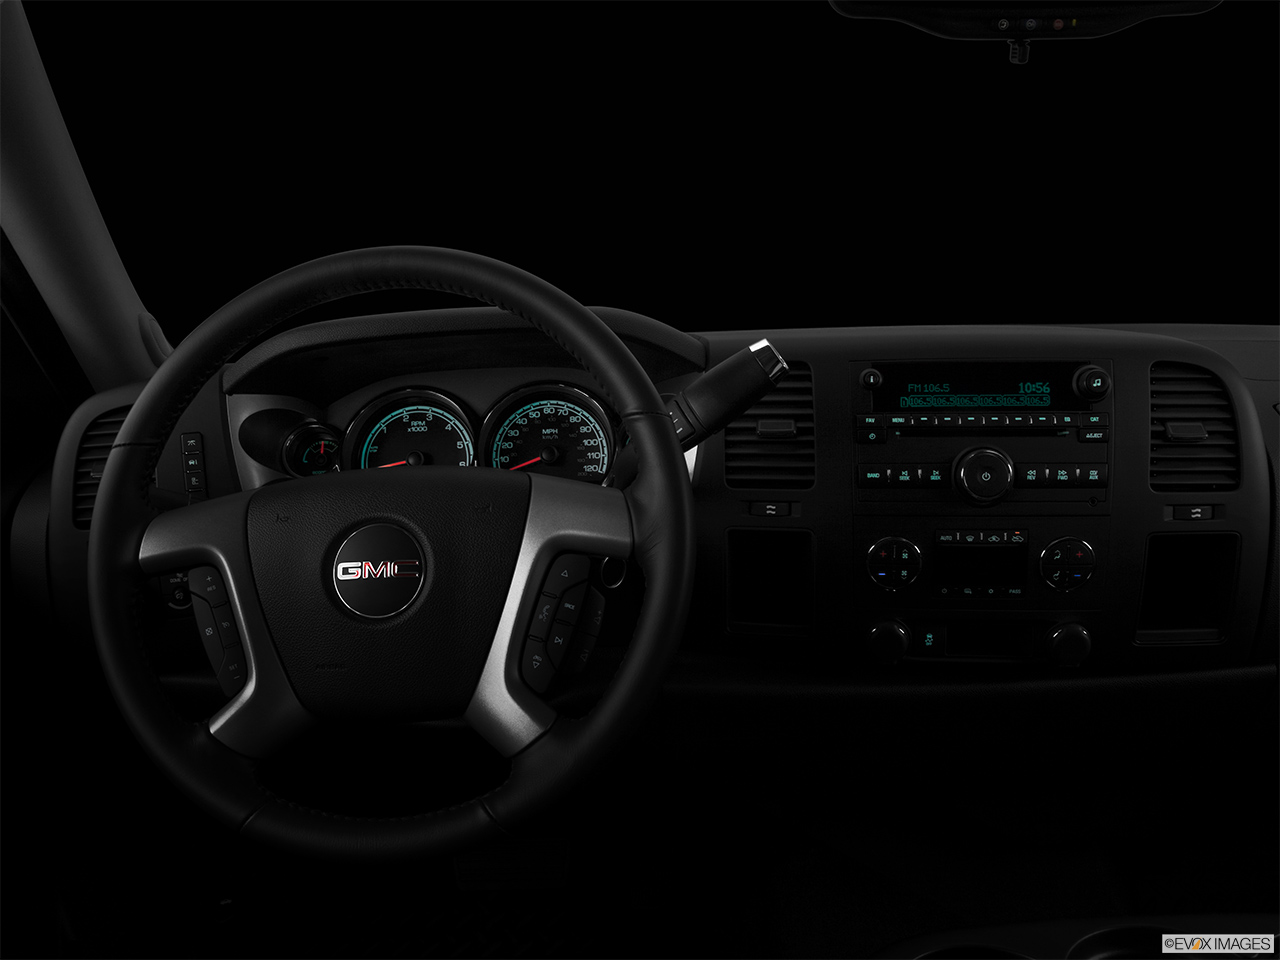 2013 GMC Sierra 1500 Hybrid 3HA Centered wide dash shot - "night" shot. 